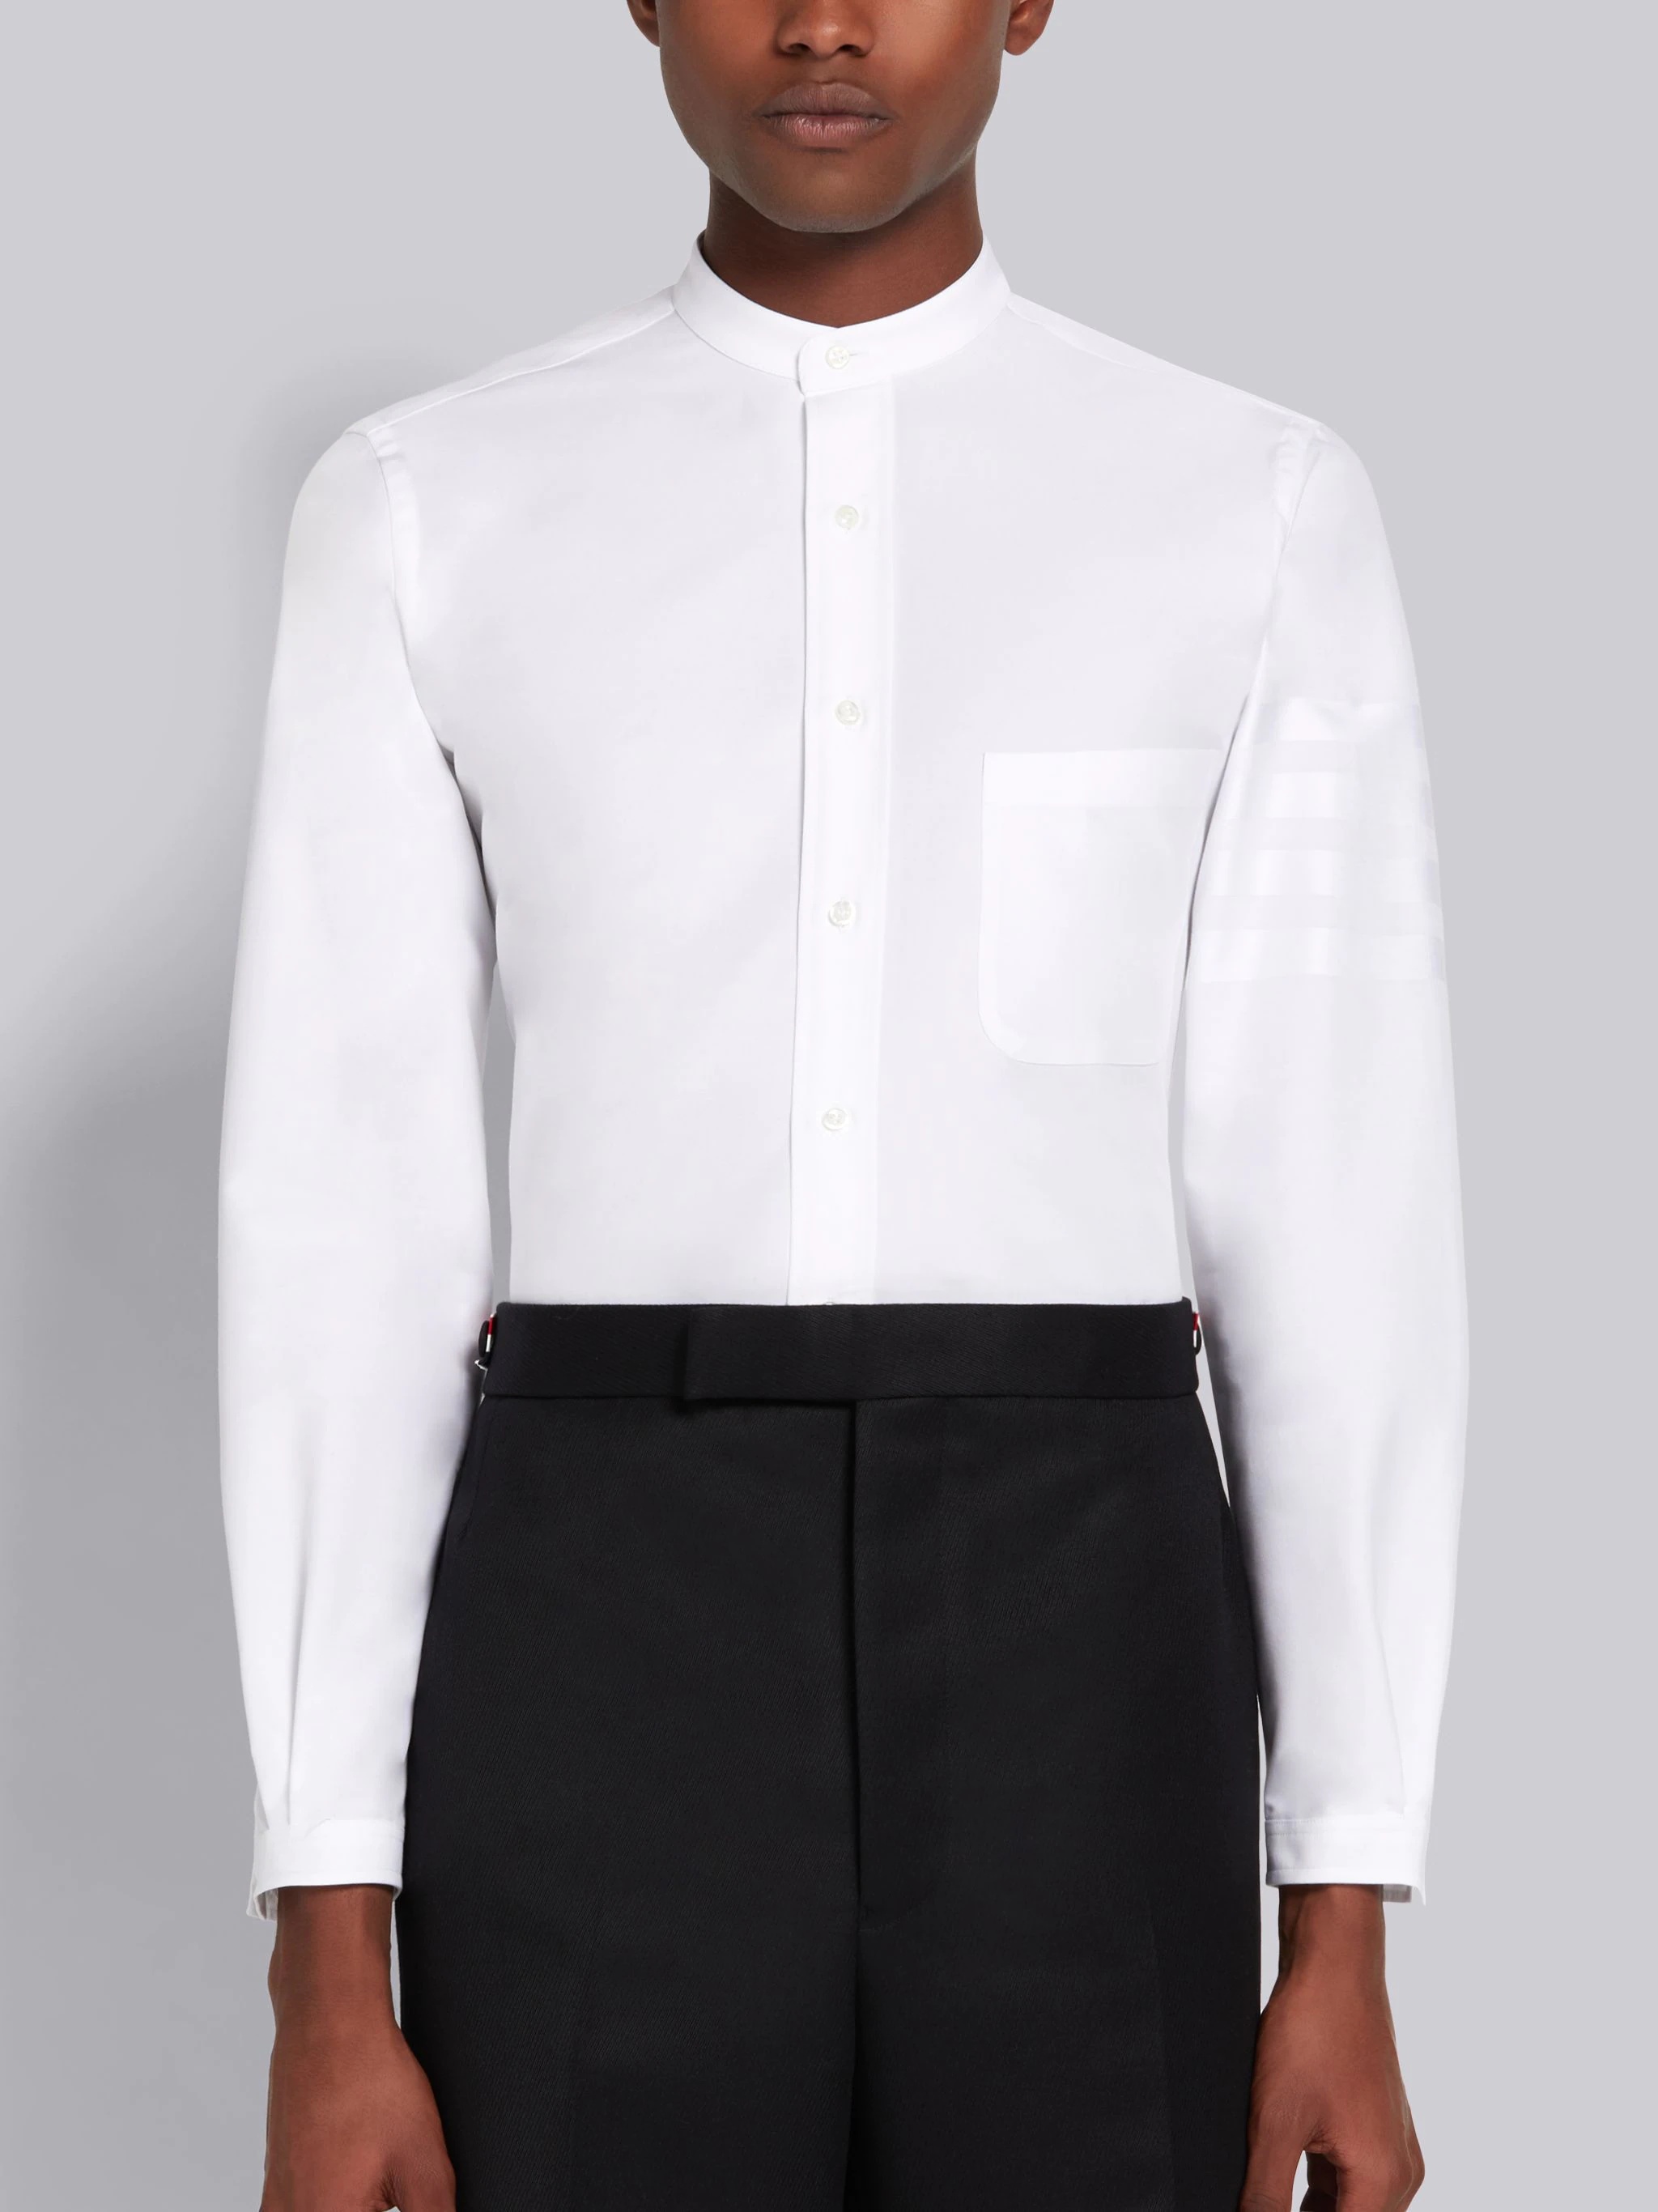 White Satin Weave Oxford Engineered 4-Bar Stripe Band Collar Classic Button Down Shirt - 1